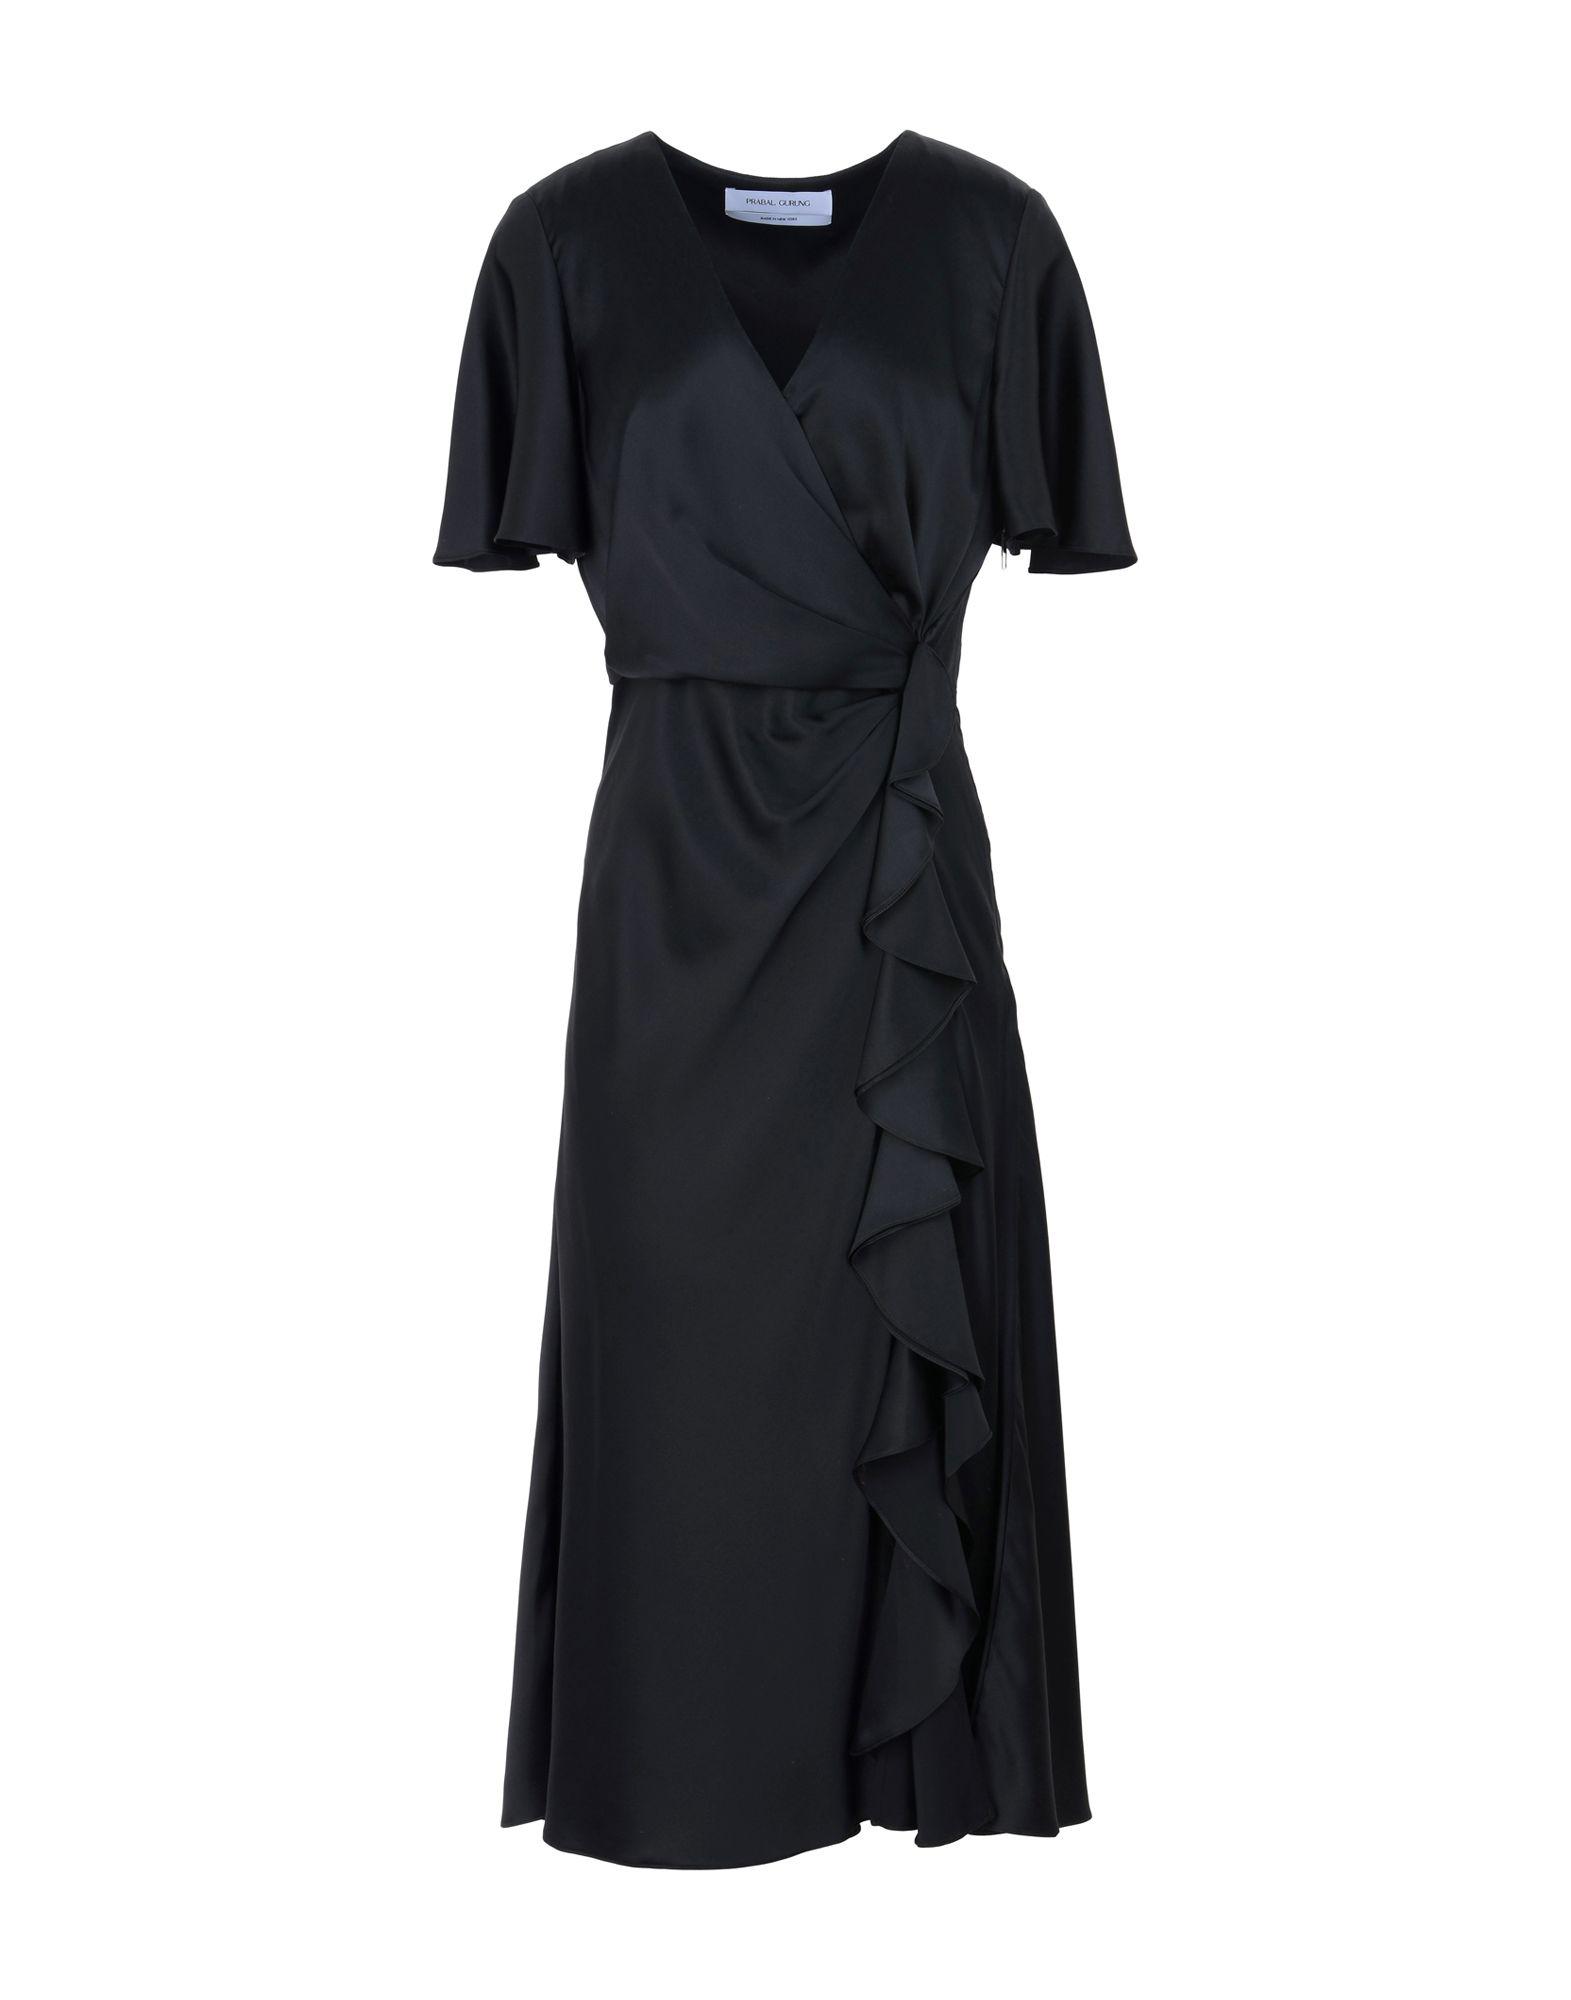 Prabal Gurung Silk 3/4 Length Dress in Black - Lyst